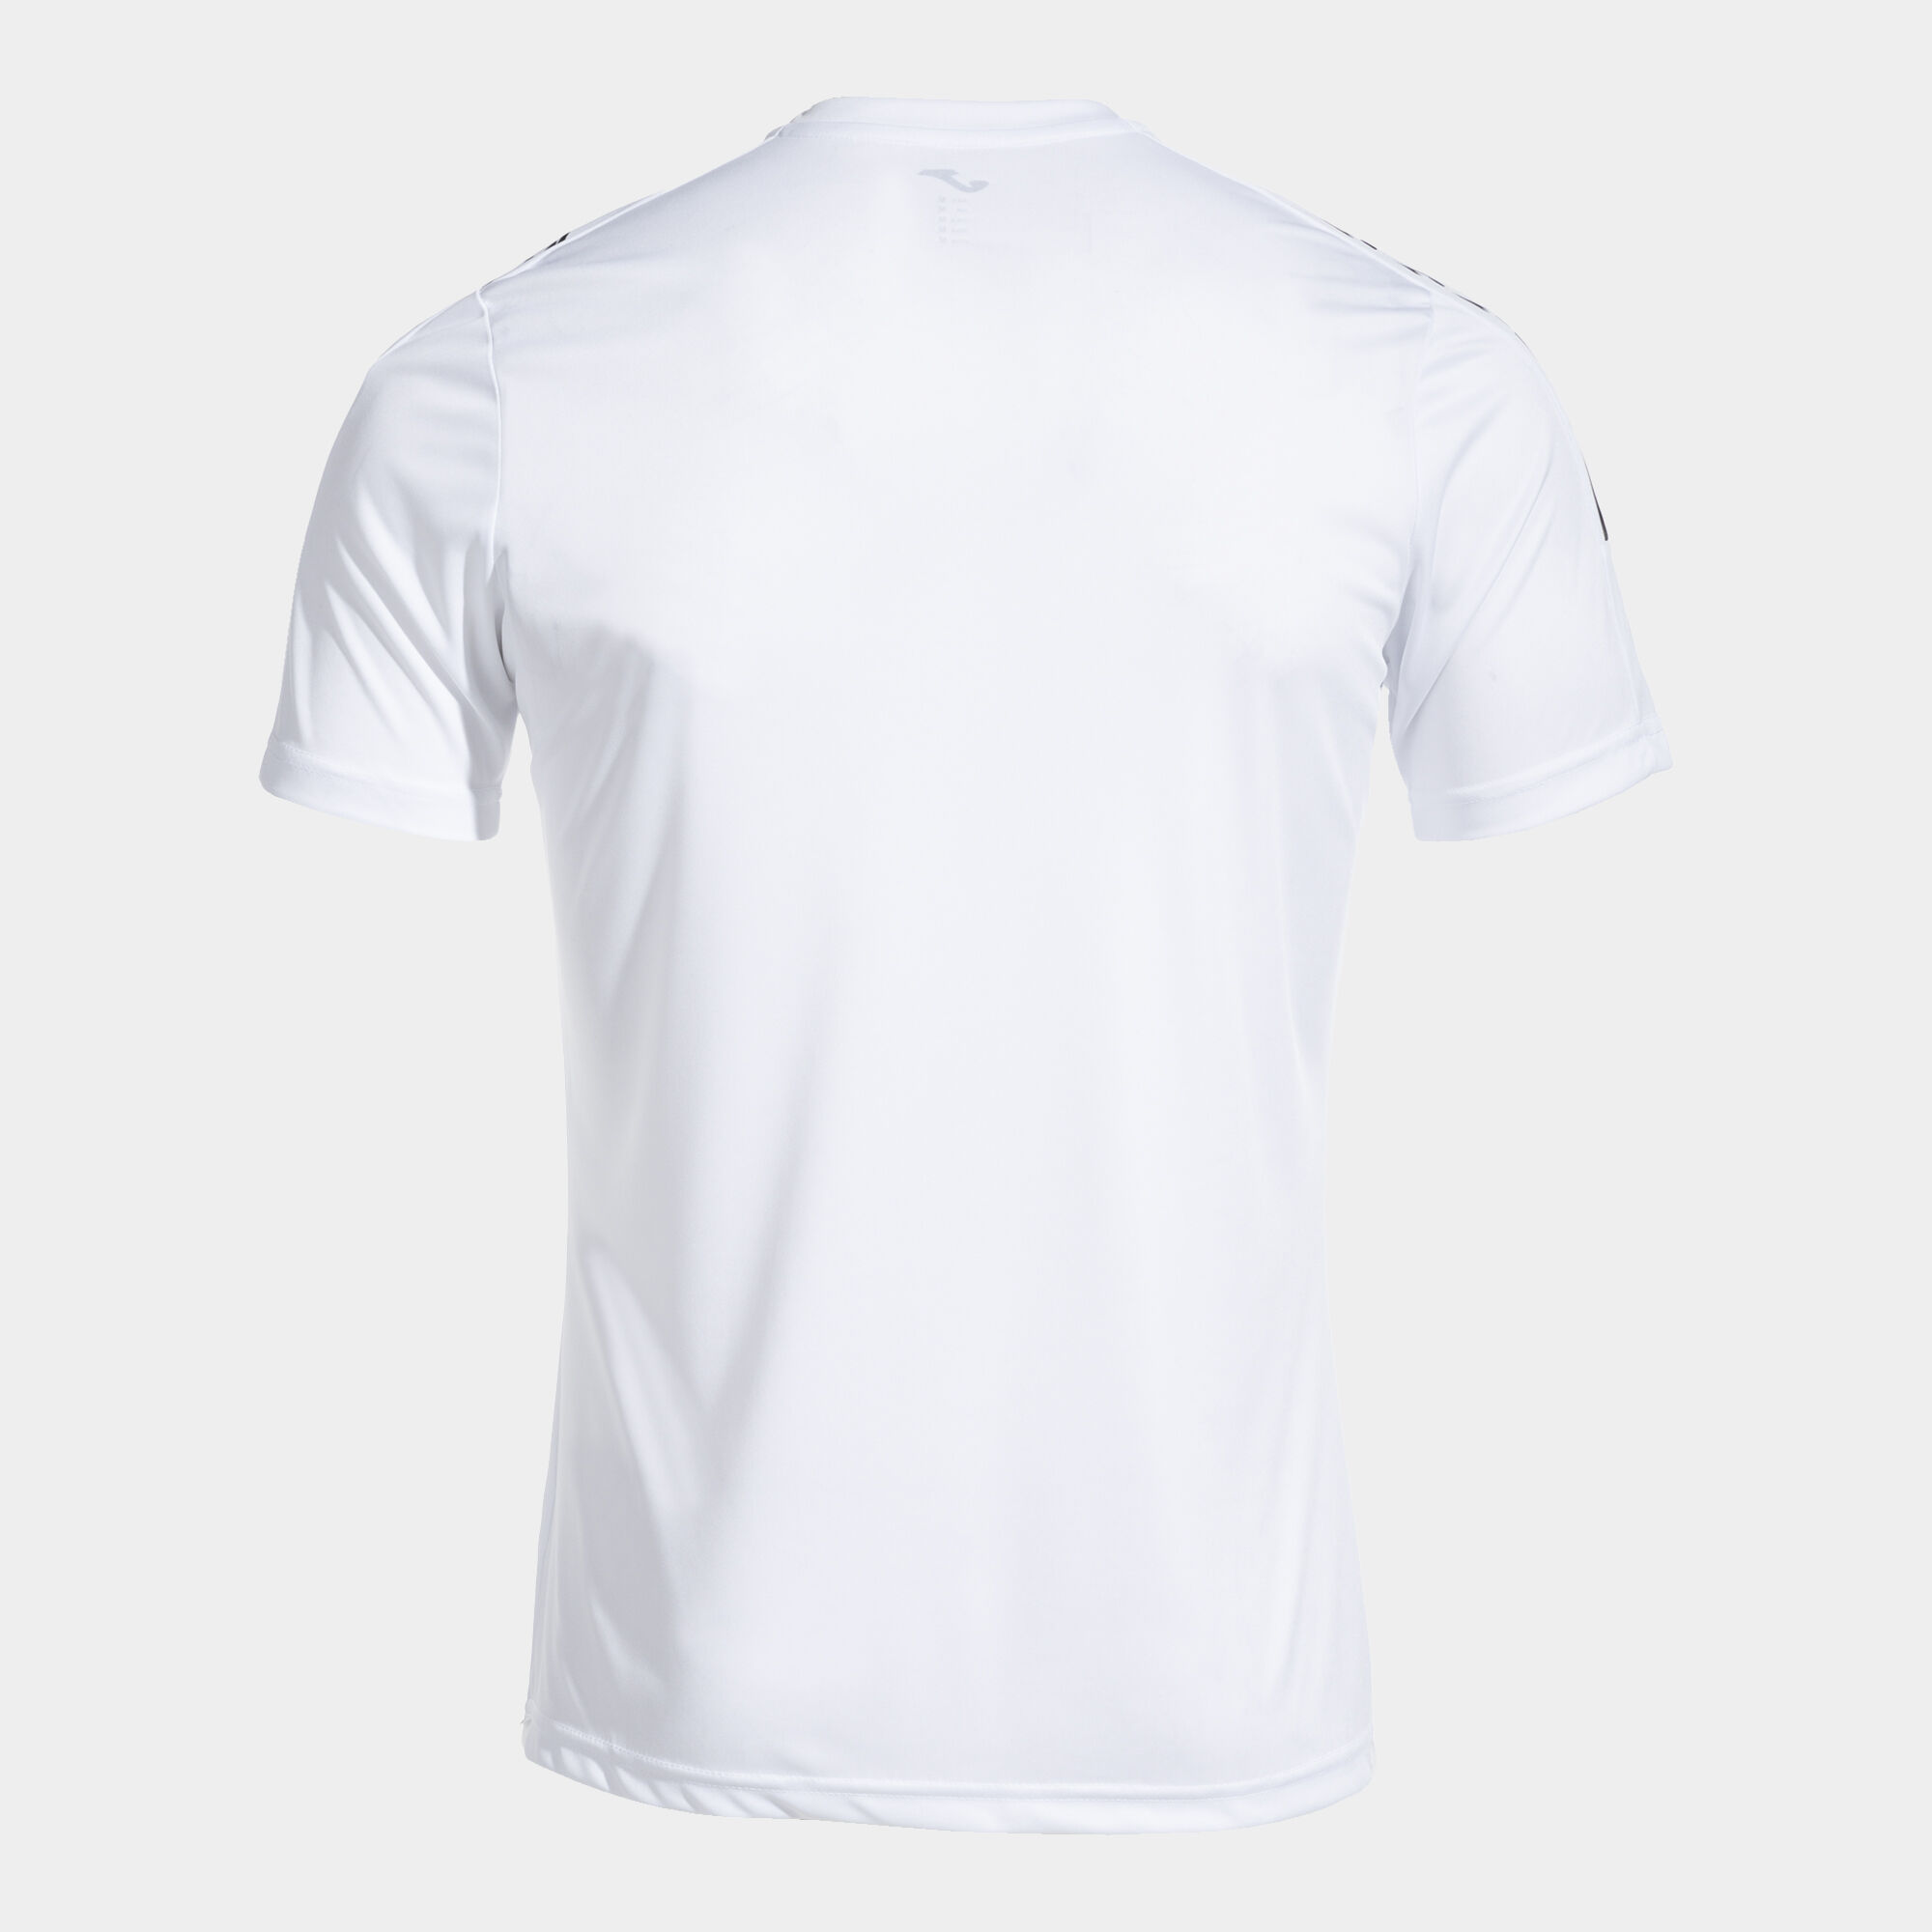 Camiseta manga corta hombre Olimpiada blanco